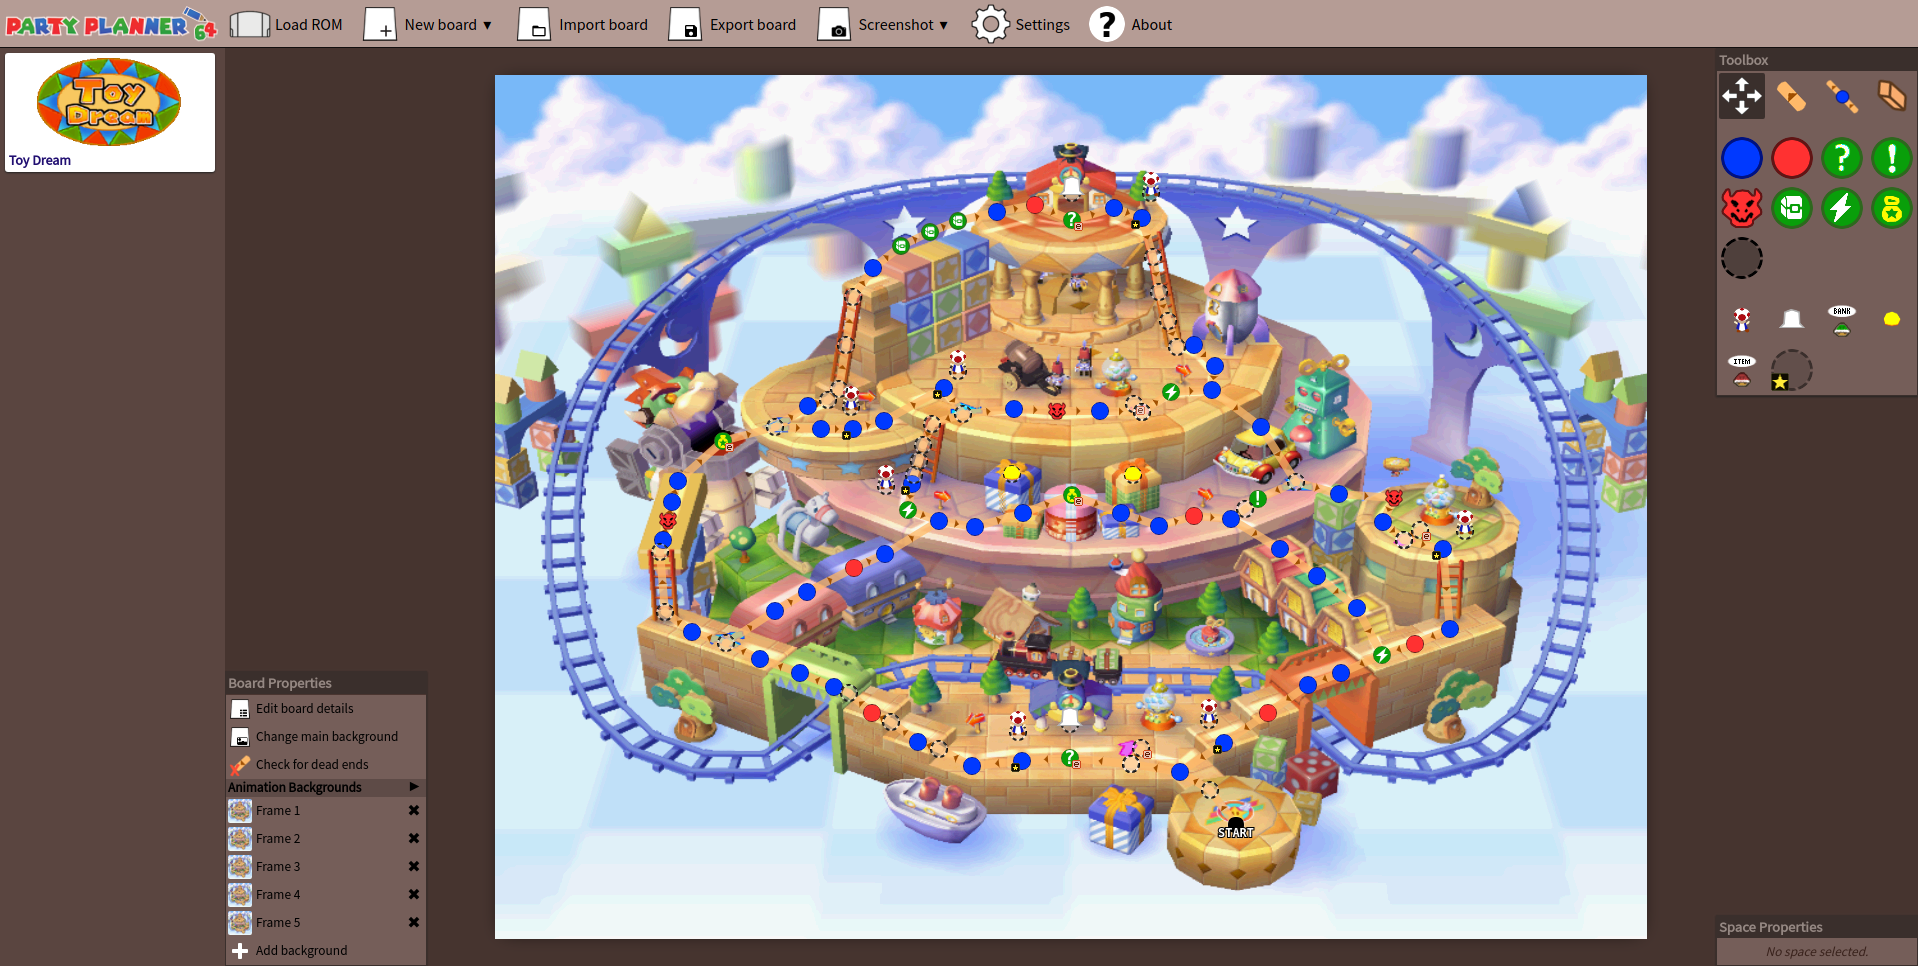 PartyPlanner64 screenshot of Toy Dream board